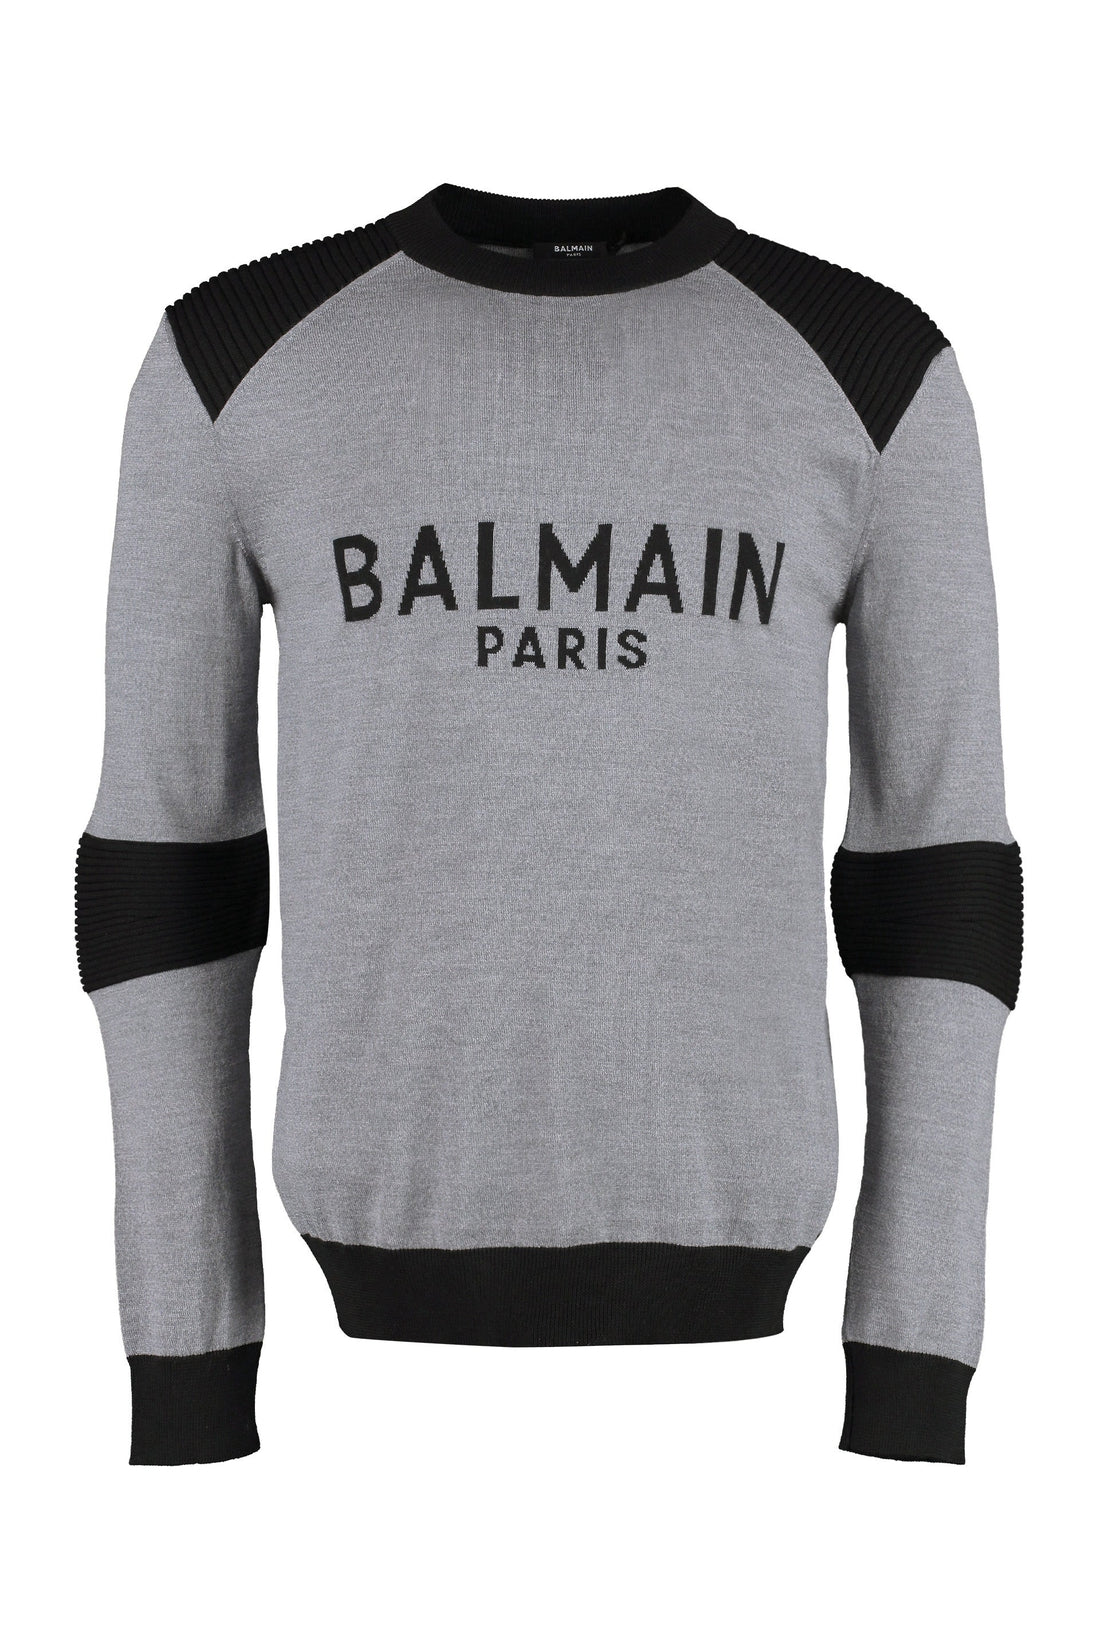 Balmain-OUTLET-SALE-Intarsia wool sweater-ARCHIVIST